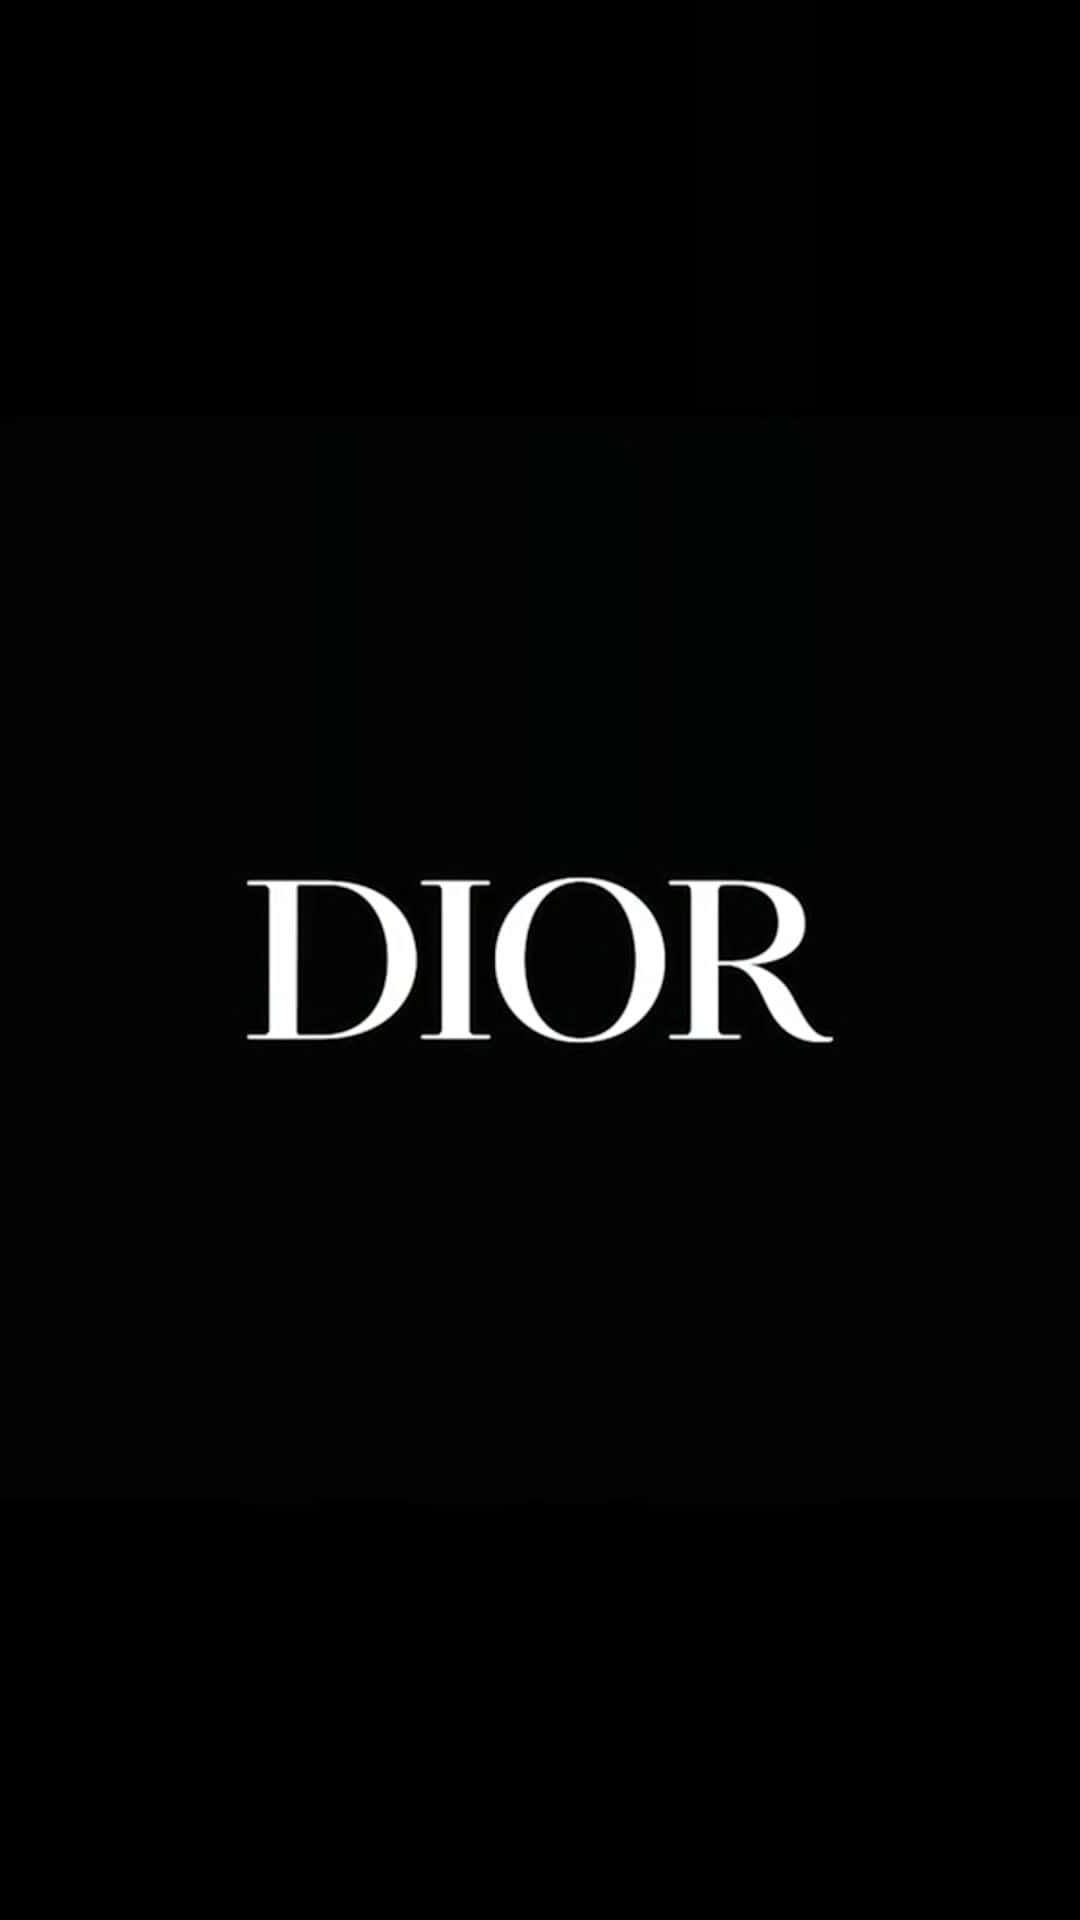 Make a statement with Dior